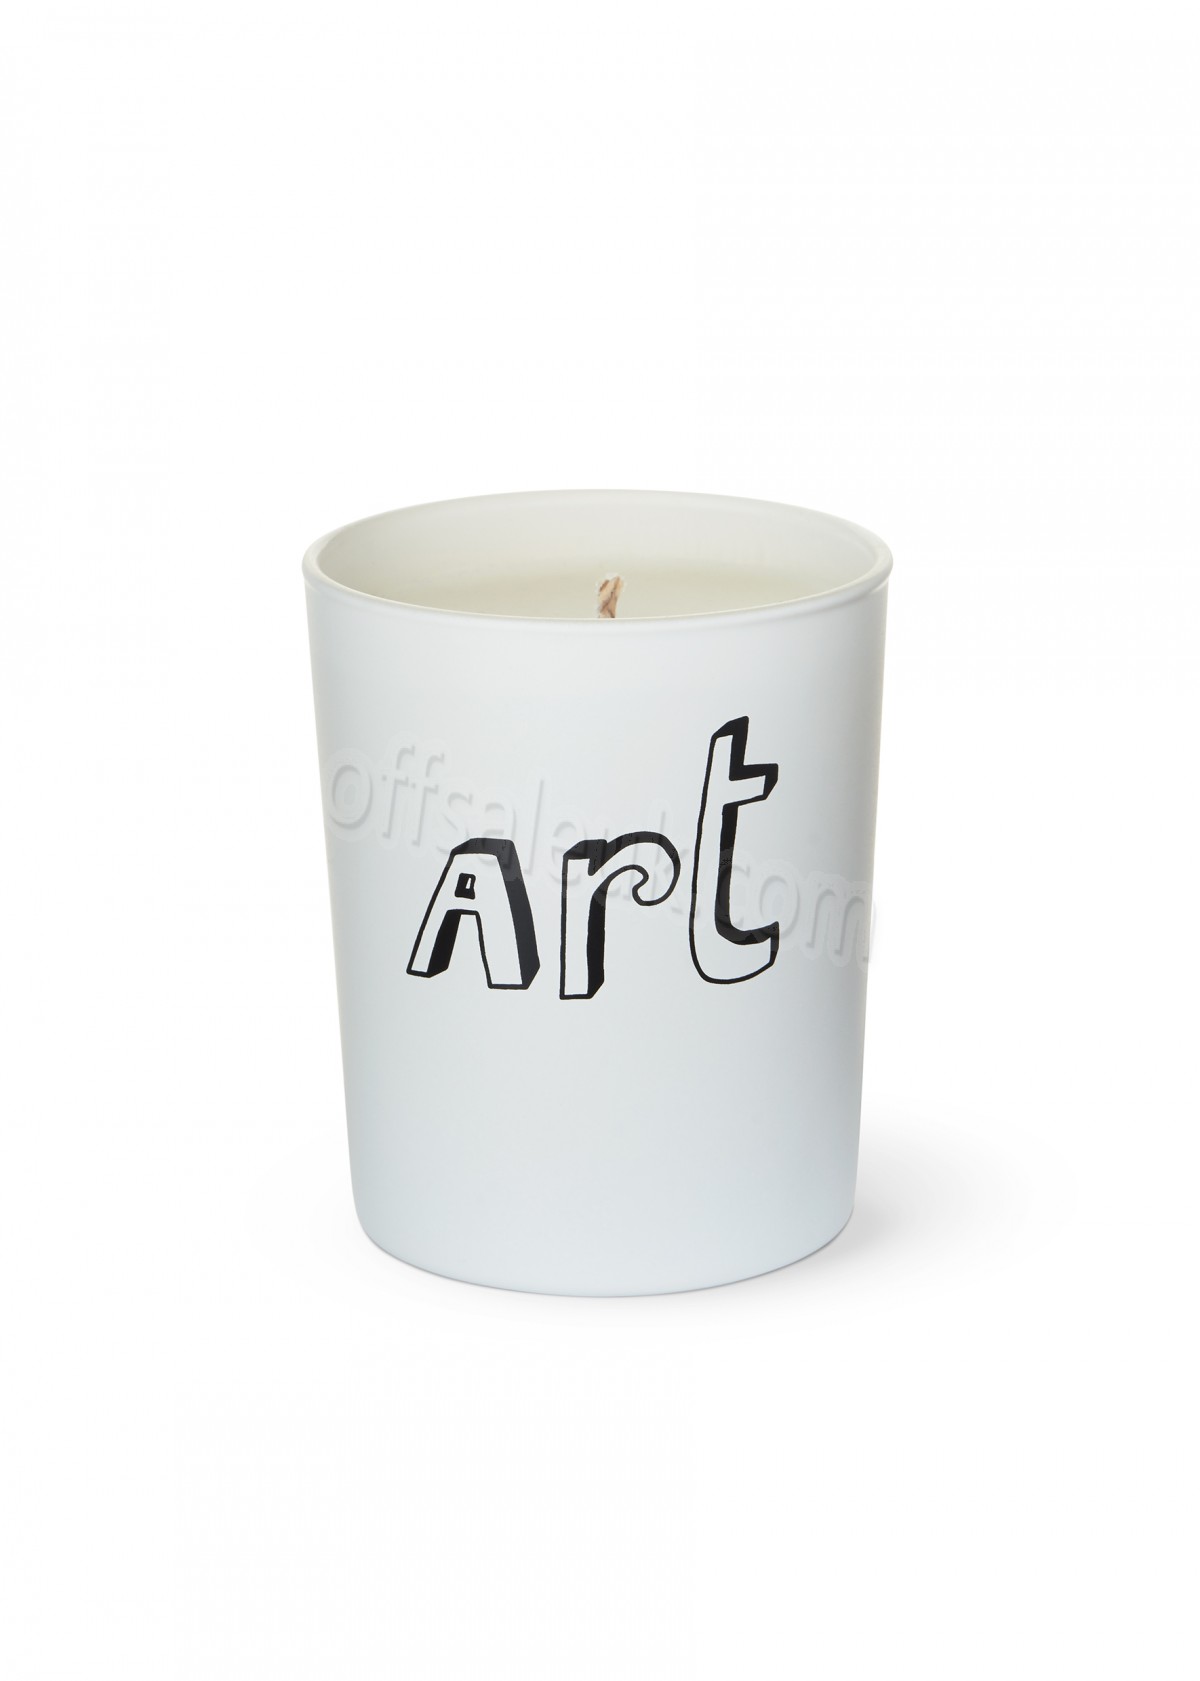 Cheap Art Candle - -0